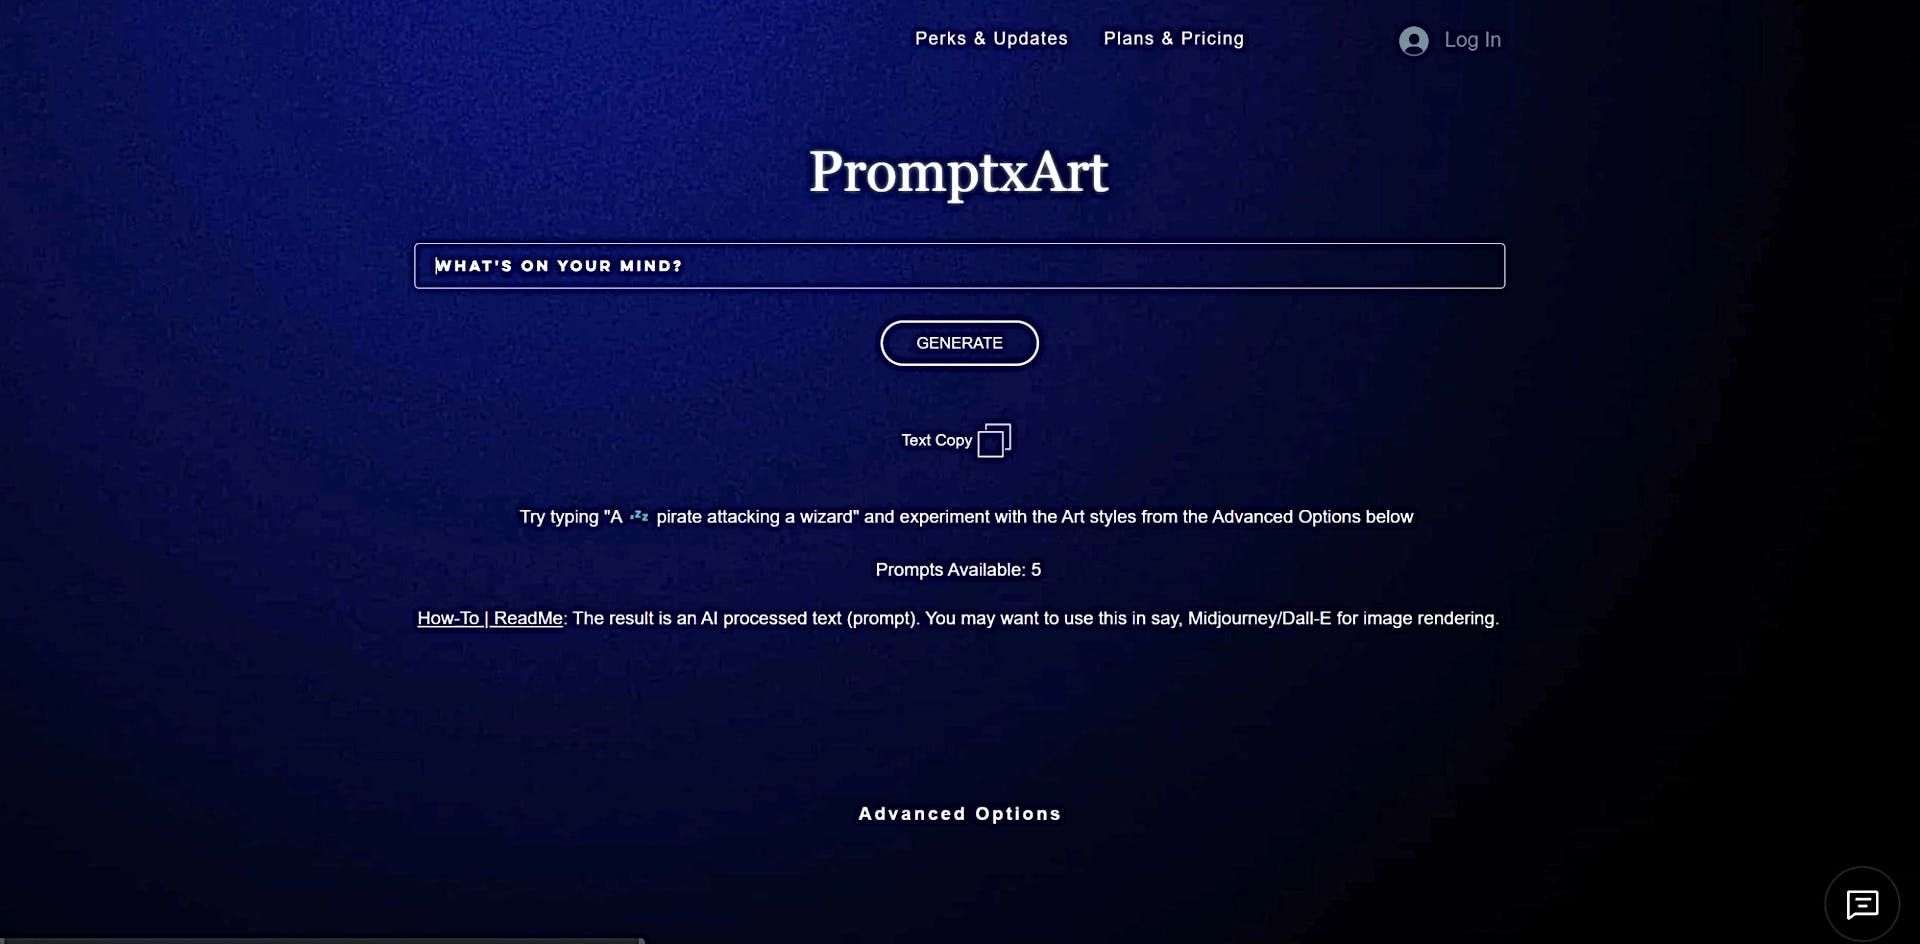 PromptxArt featured